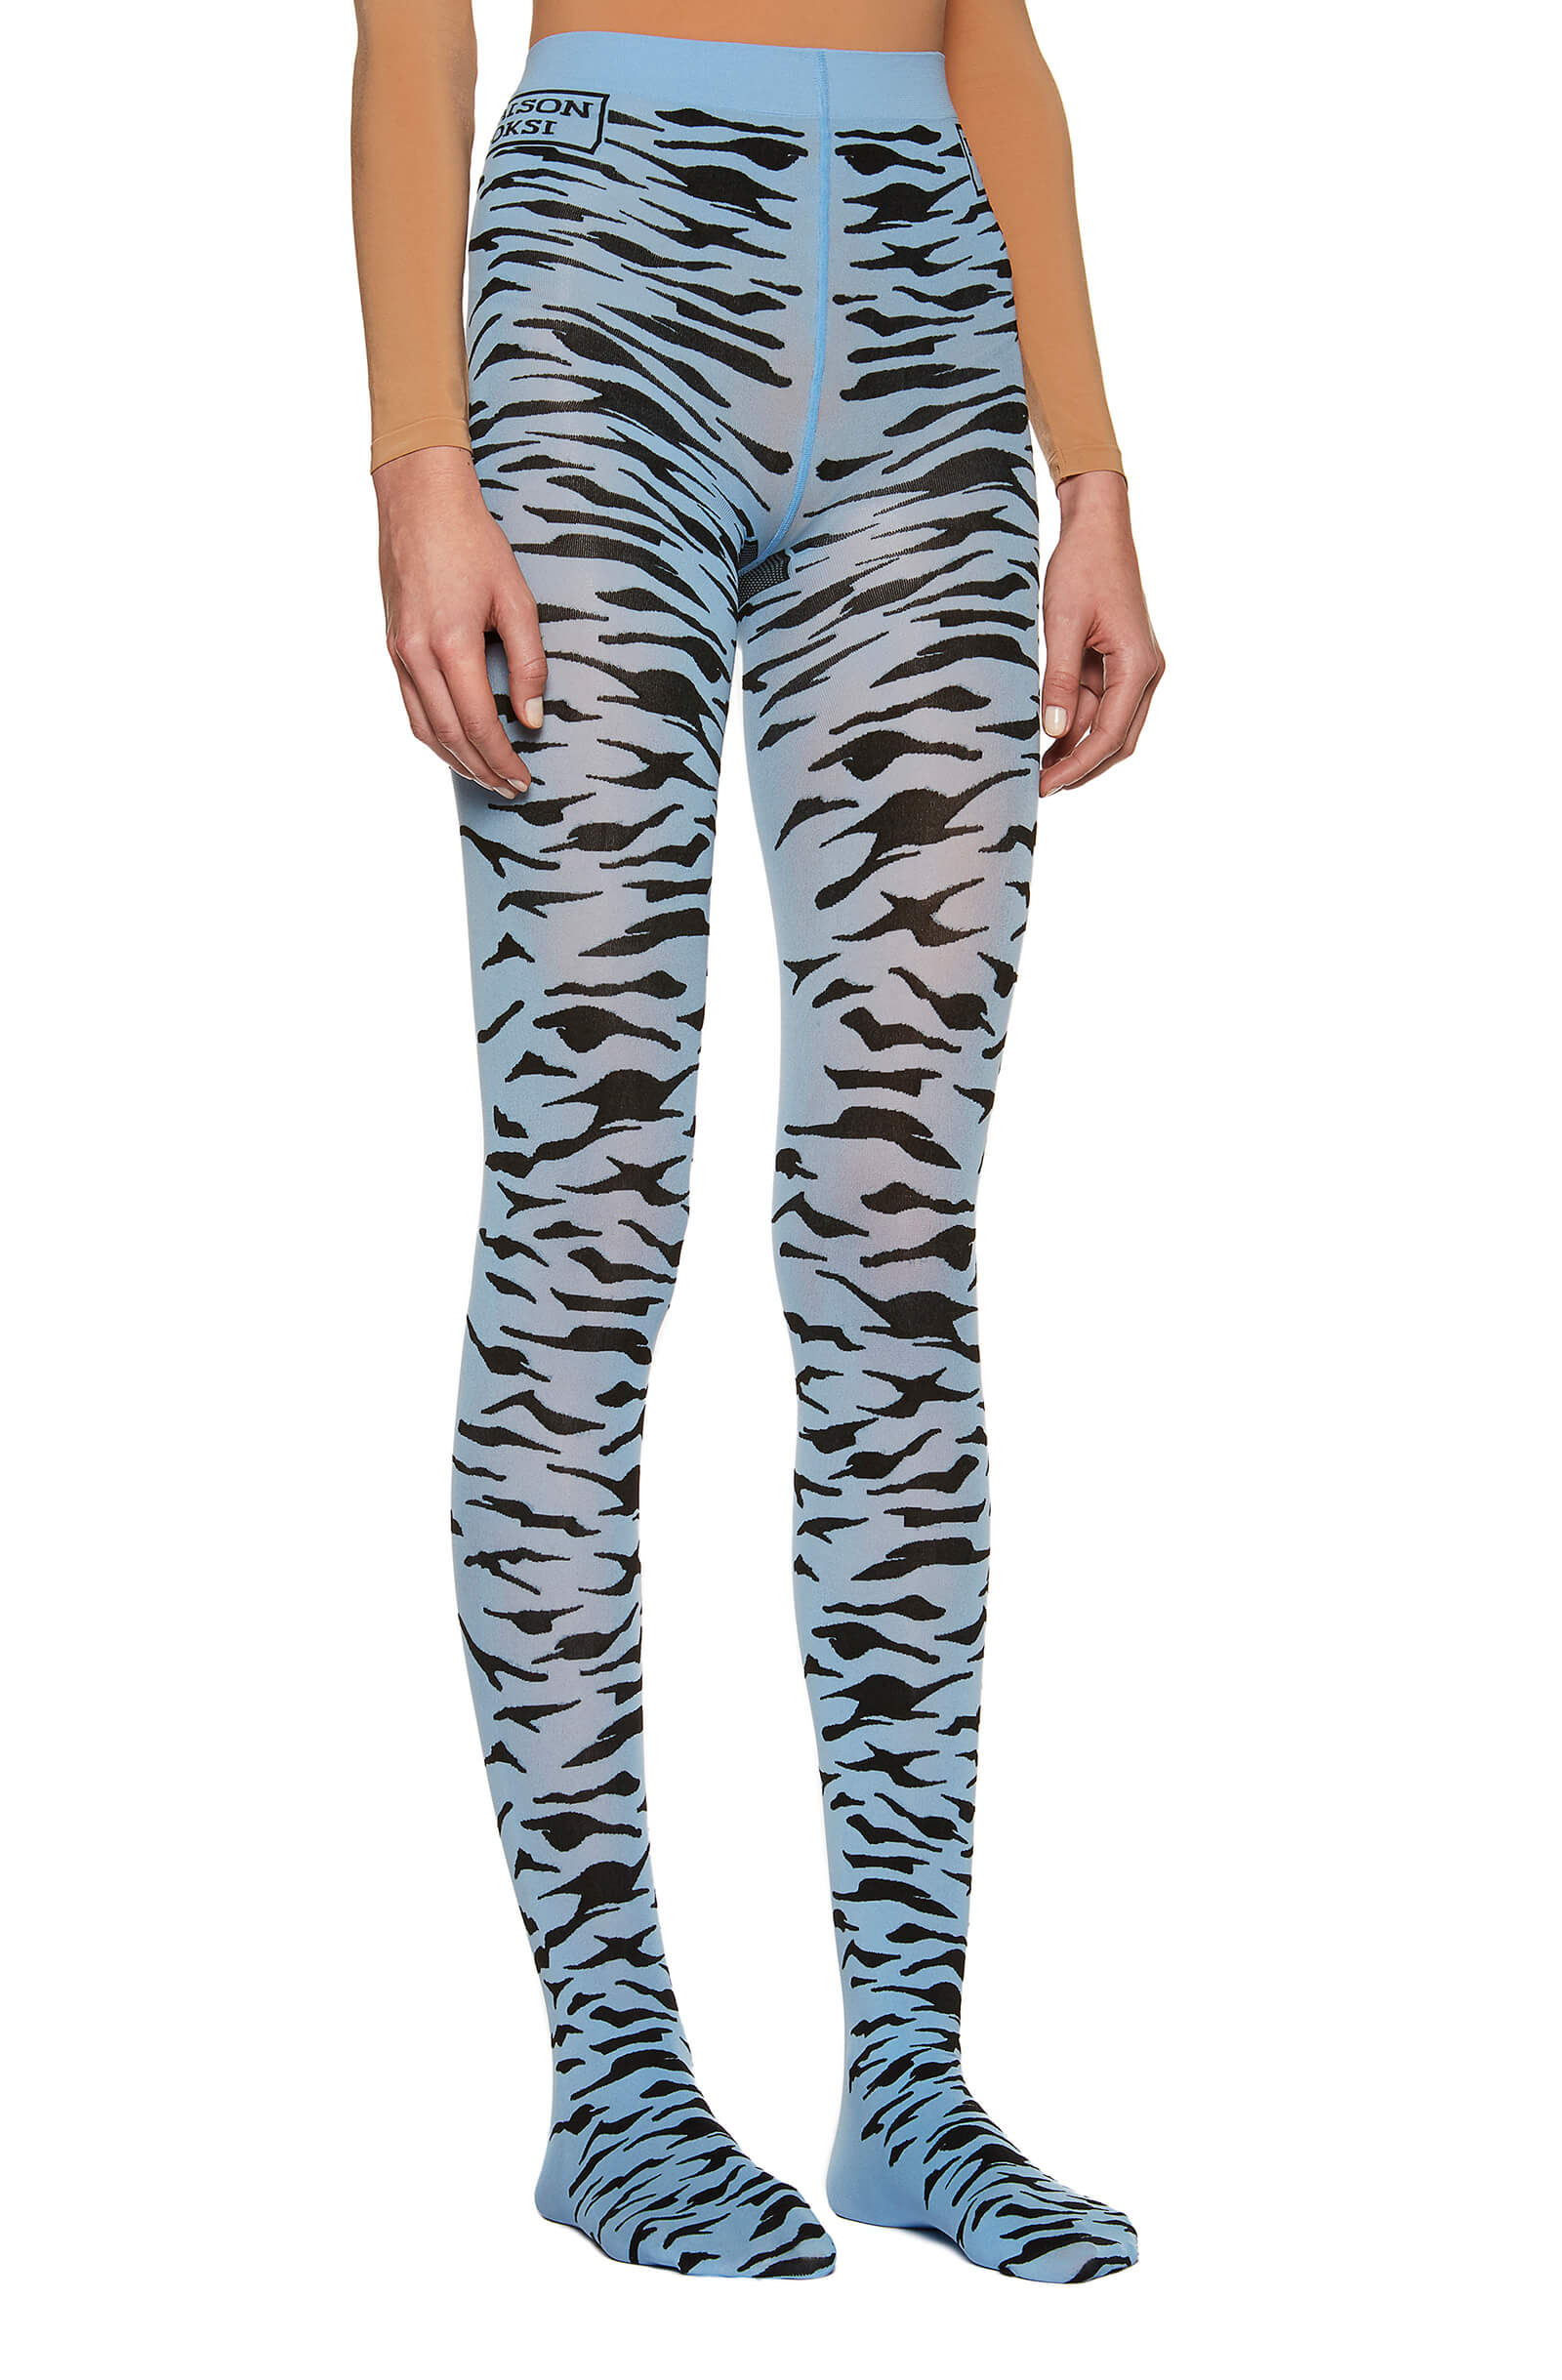 KYODAN Women Leggings Blue White Zebra Small Medium S & M Tiger Animal NWT  $68